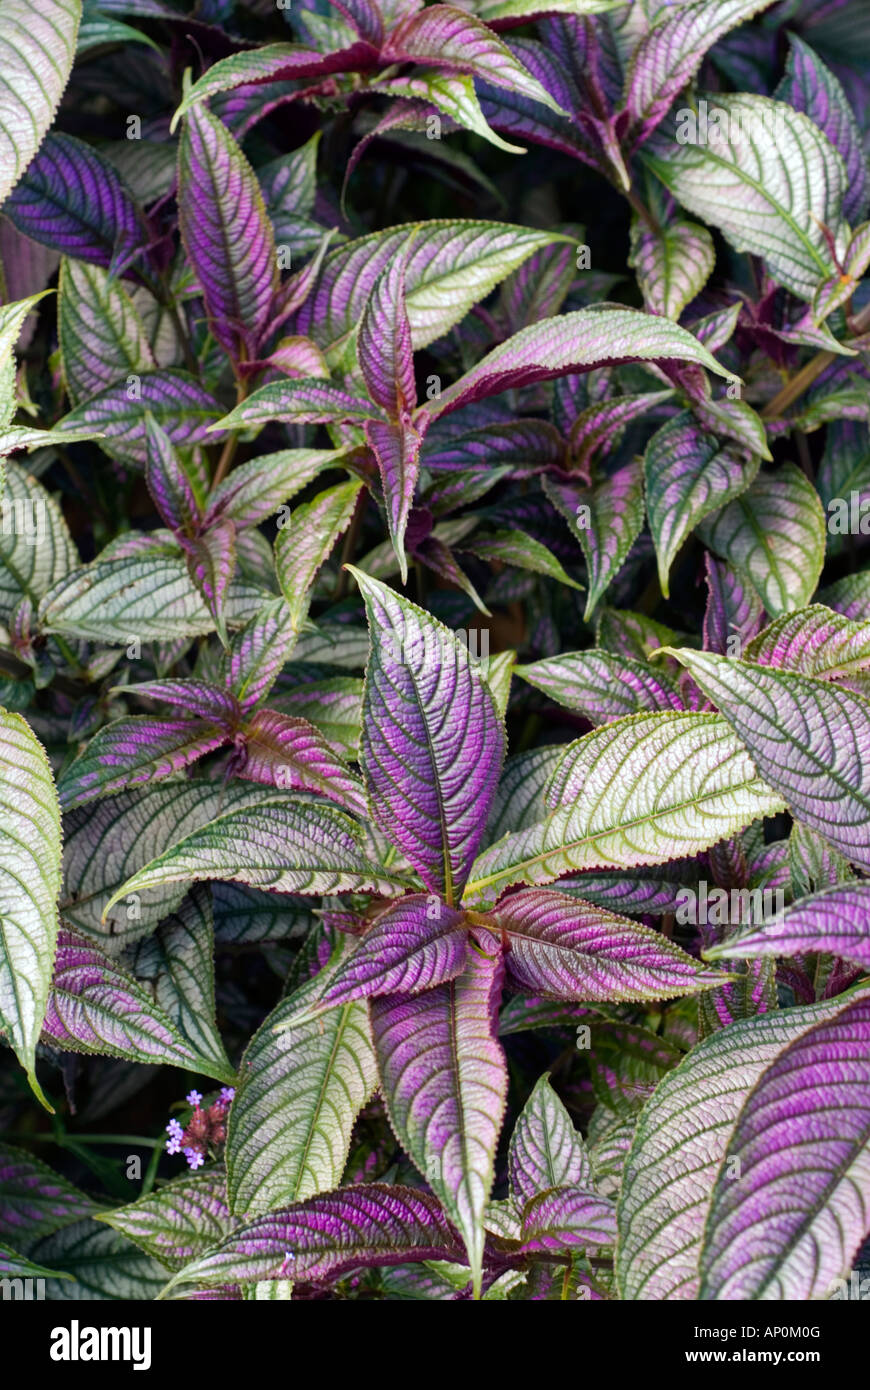 Strobilanthes dyerianus Persian Shield foliage plant closeup close up portrait showing purple, silver & green leaves Stock Photo